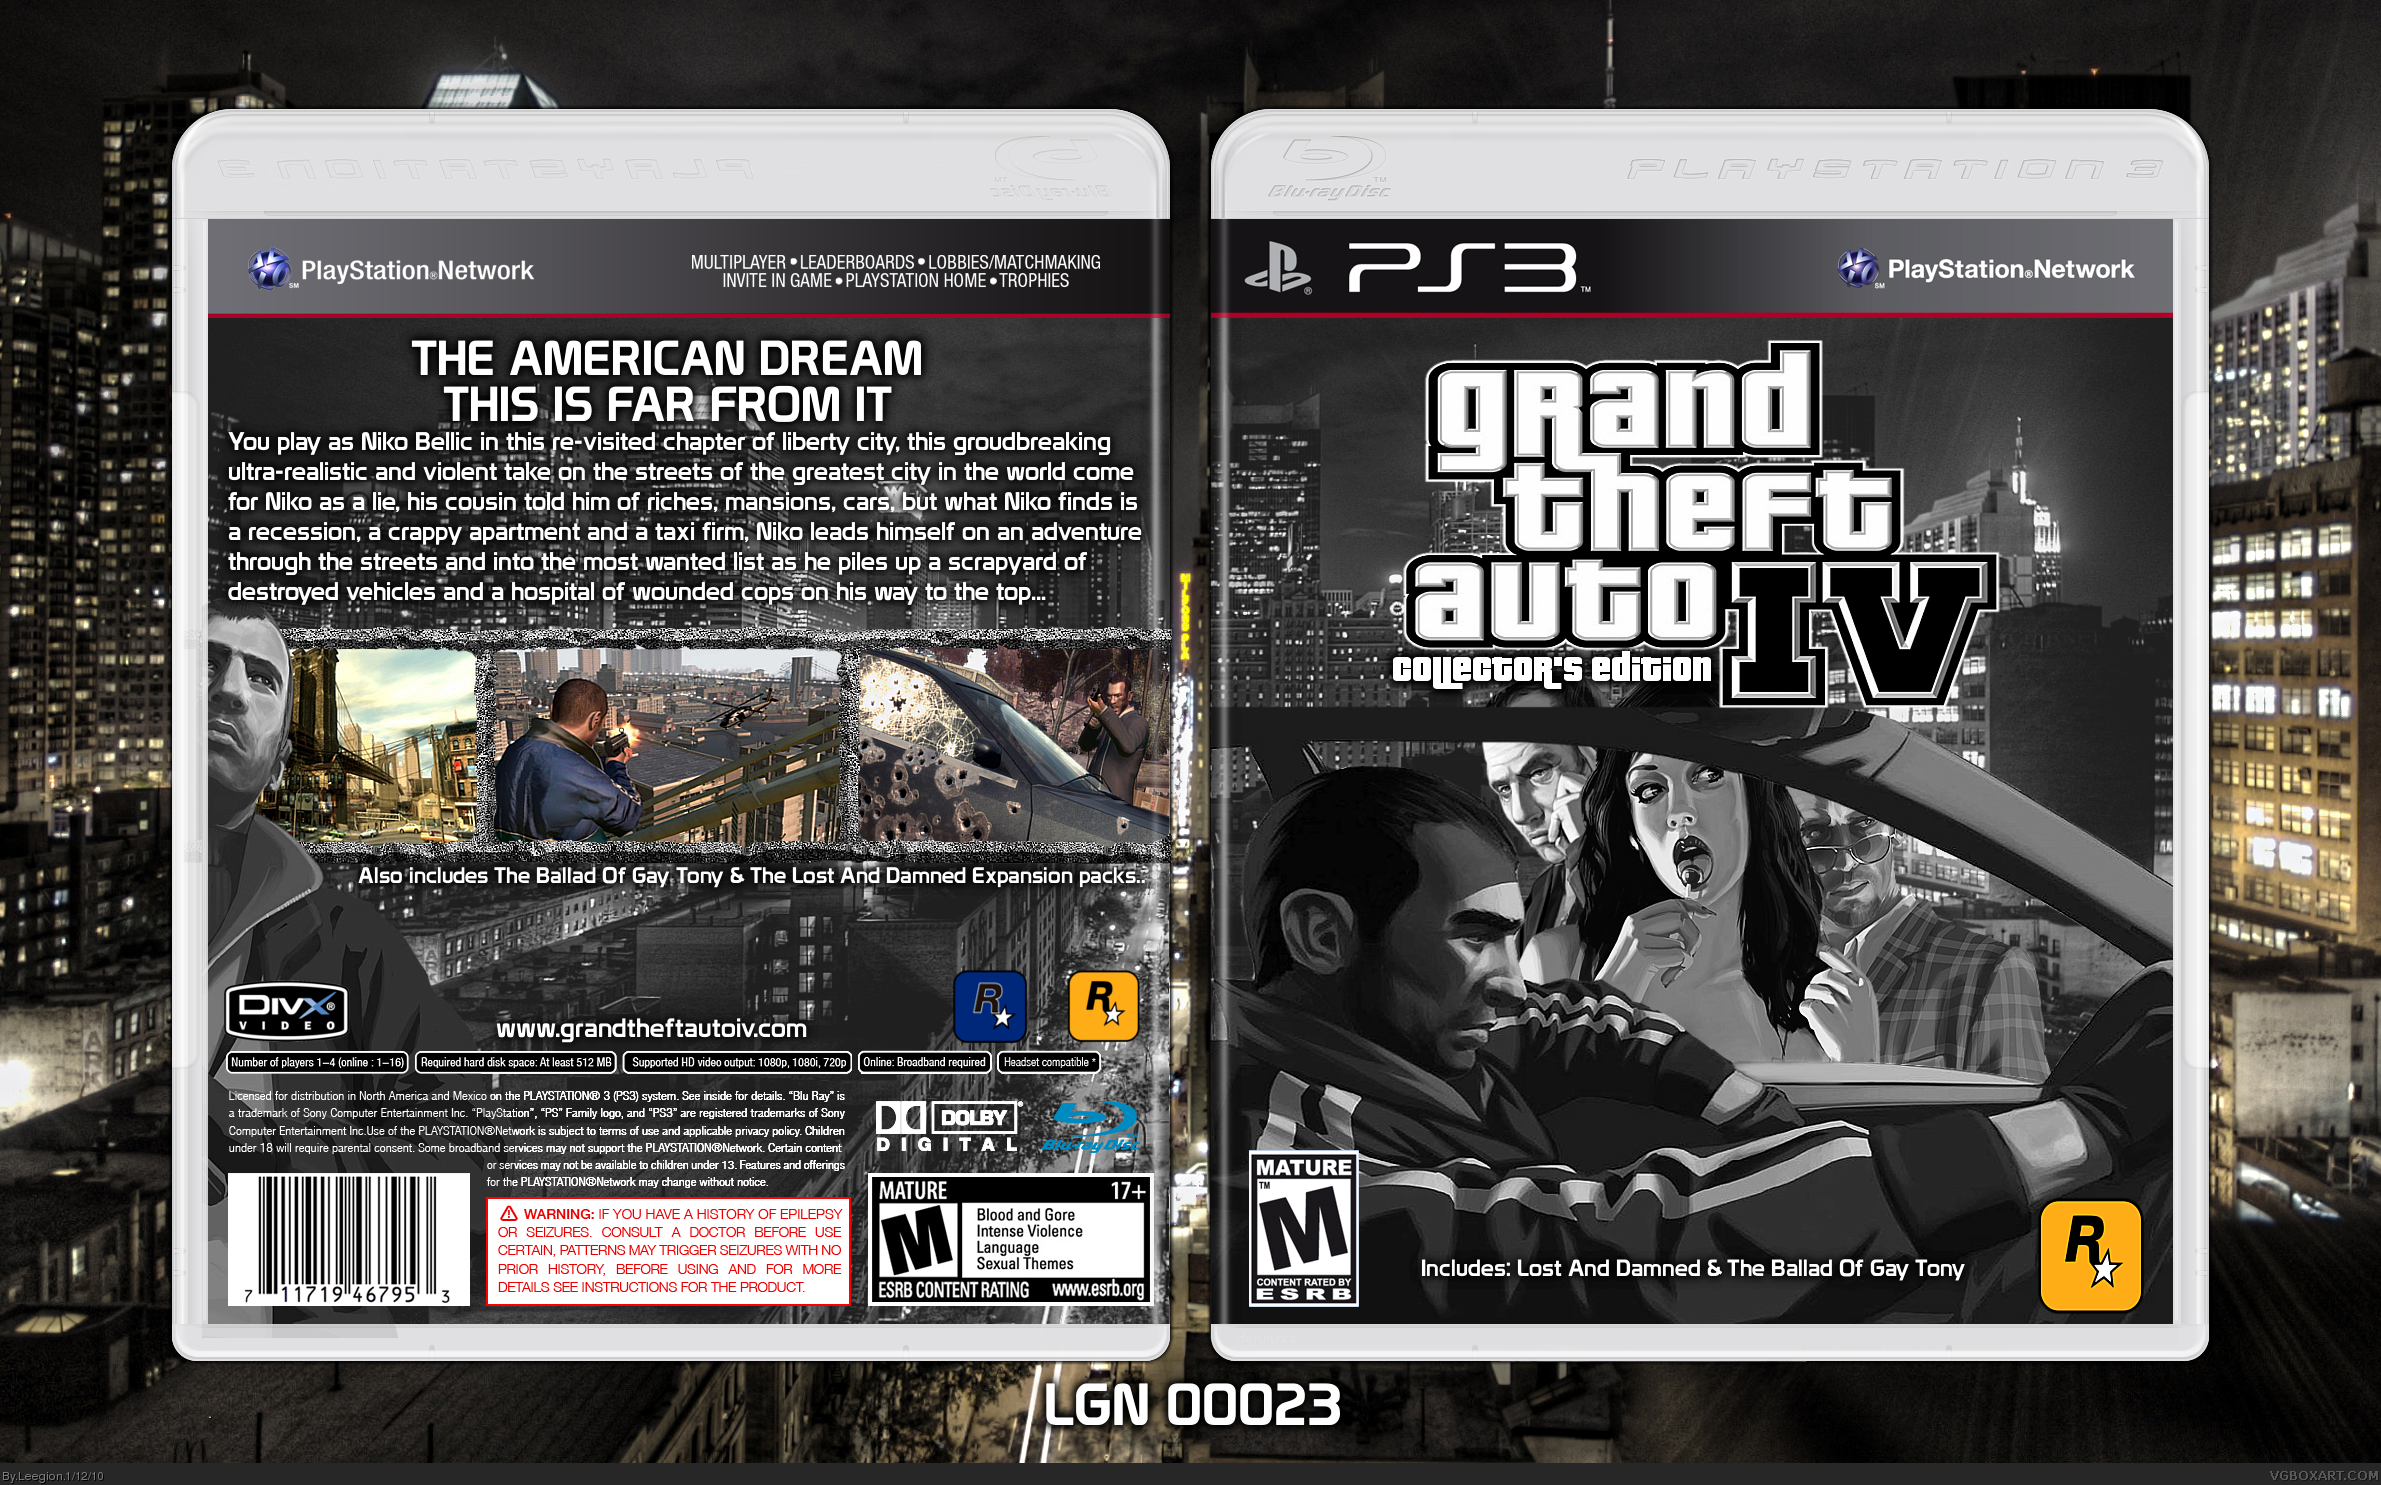 Grand Theft Auto IV: Collector's Edition box cover